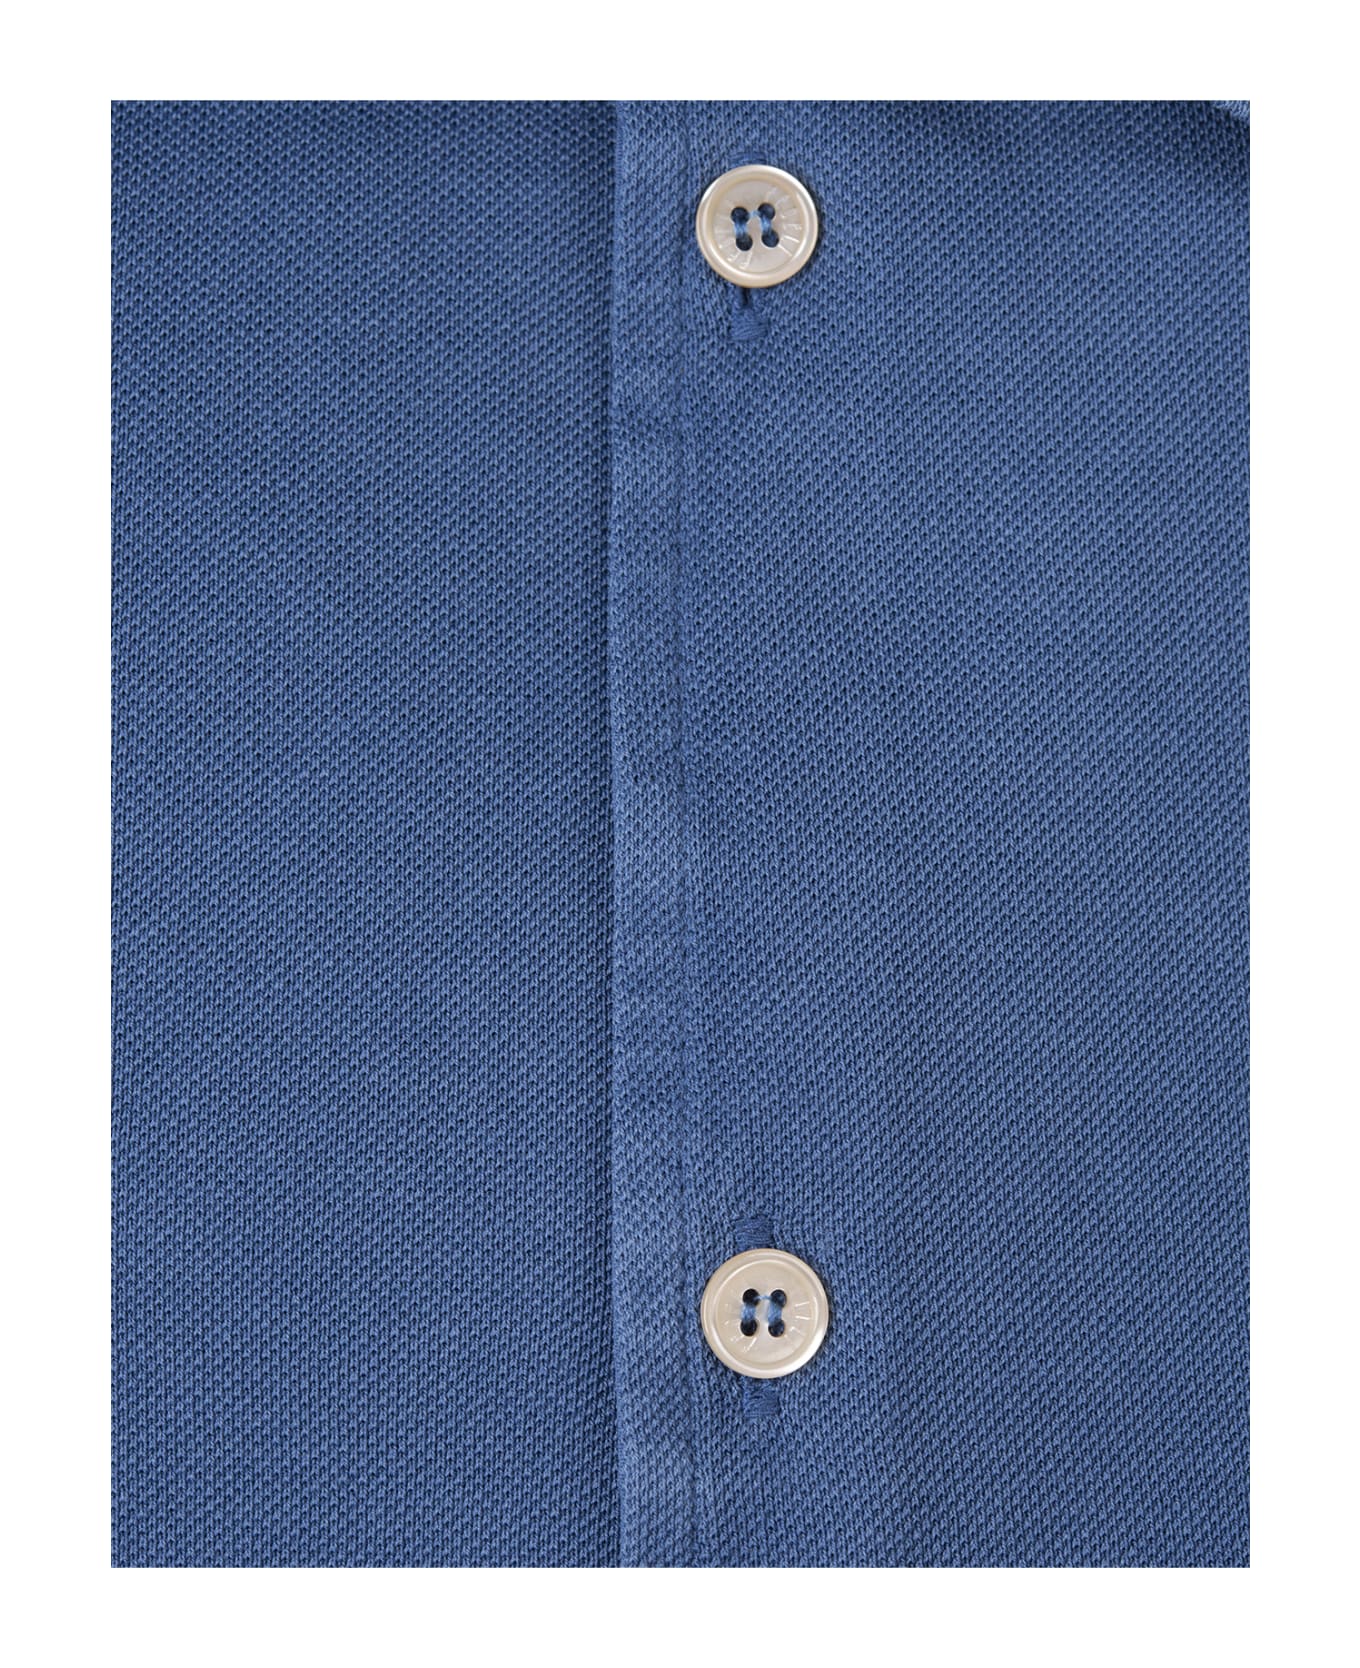 Fedeli Teorema Shirt In Cobalt Blue Cotton Piqué - Blue シャツ